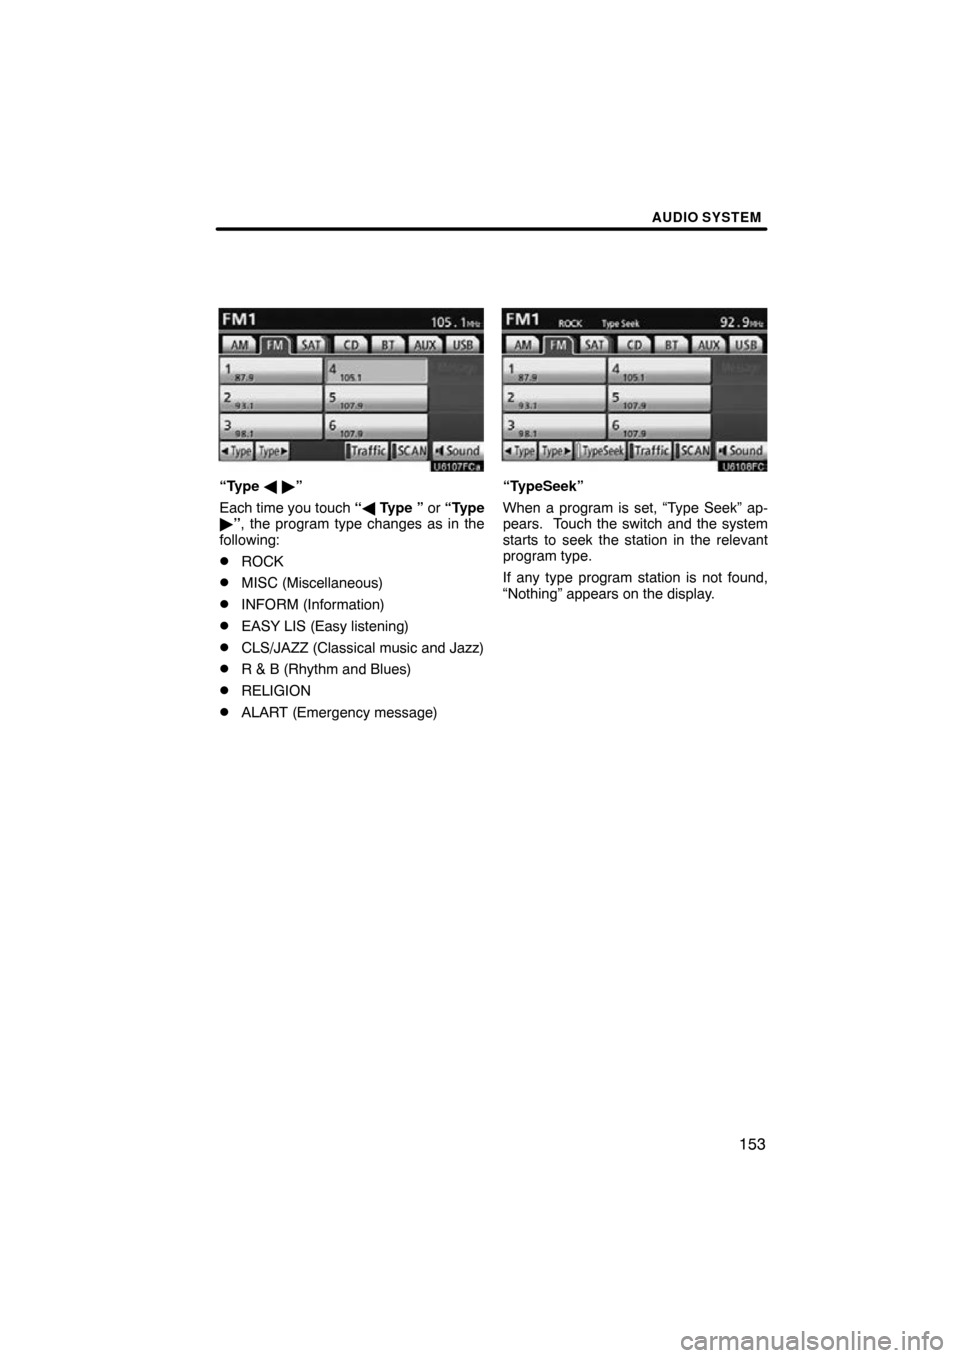 TOYOTA AVALON 2011 XX30 / 3.G Navigation Manual AUDIO SYSTEM
153
“Type   ”
Each time you touch  “ Type ” or “Type
 ”, the program type changes as in the
following:
ROCK
MISC (Miscellaneous)
INFORM (Information)
EASY LIS (Easy li